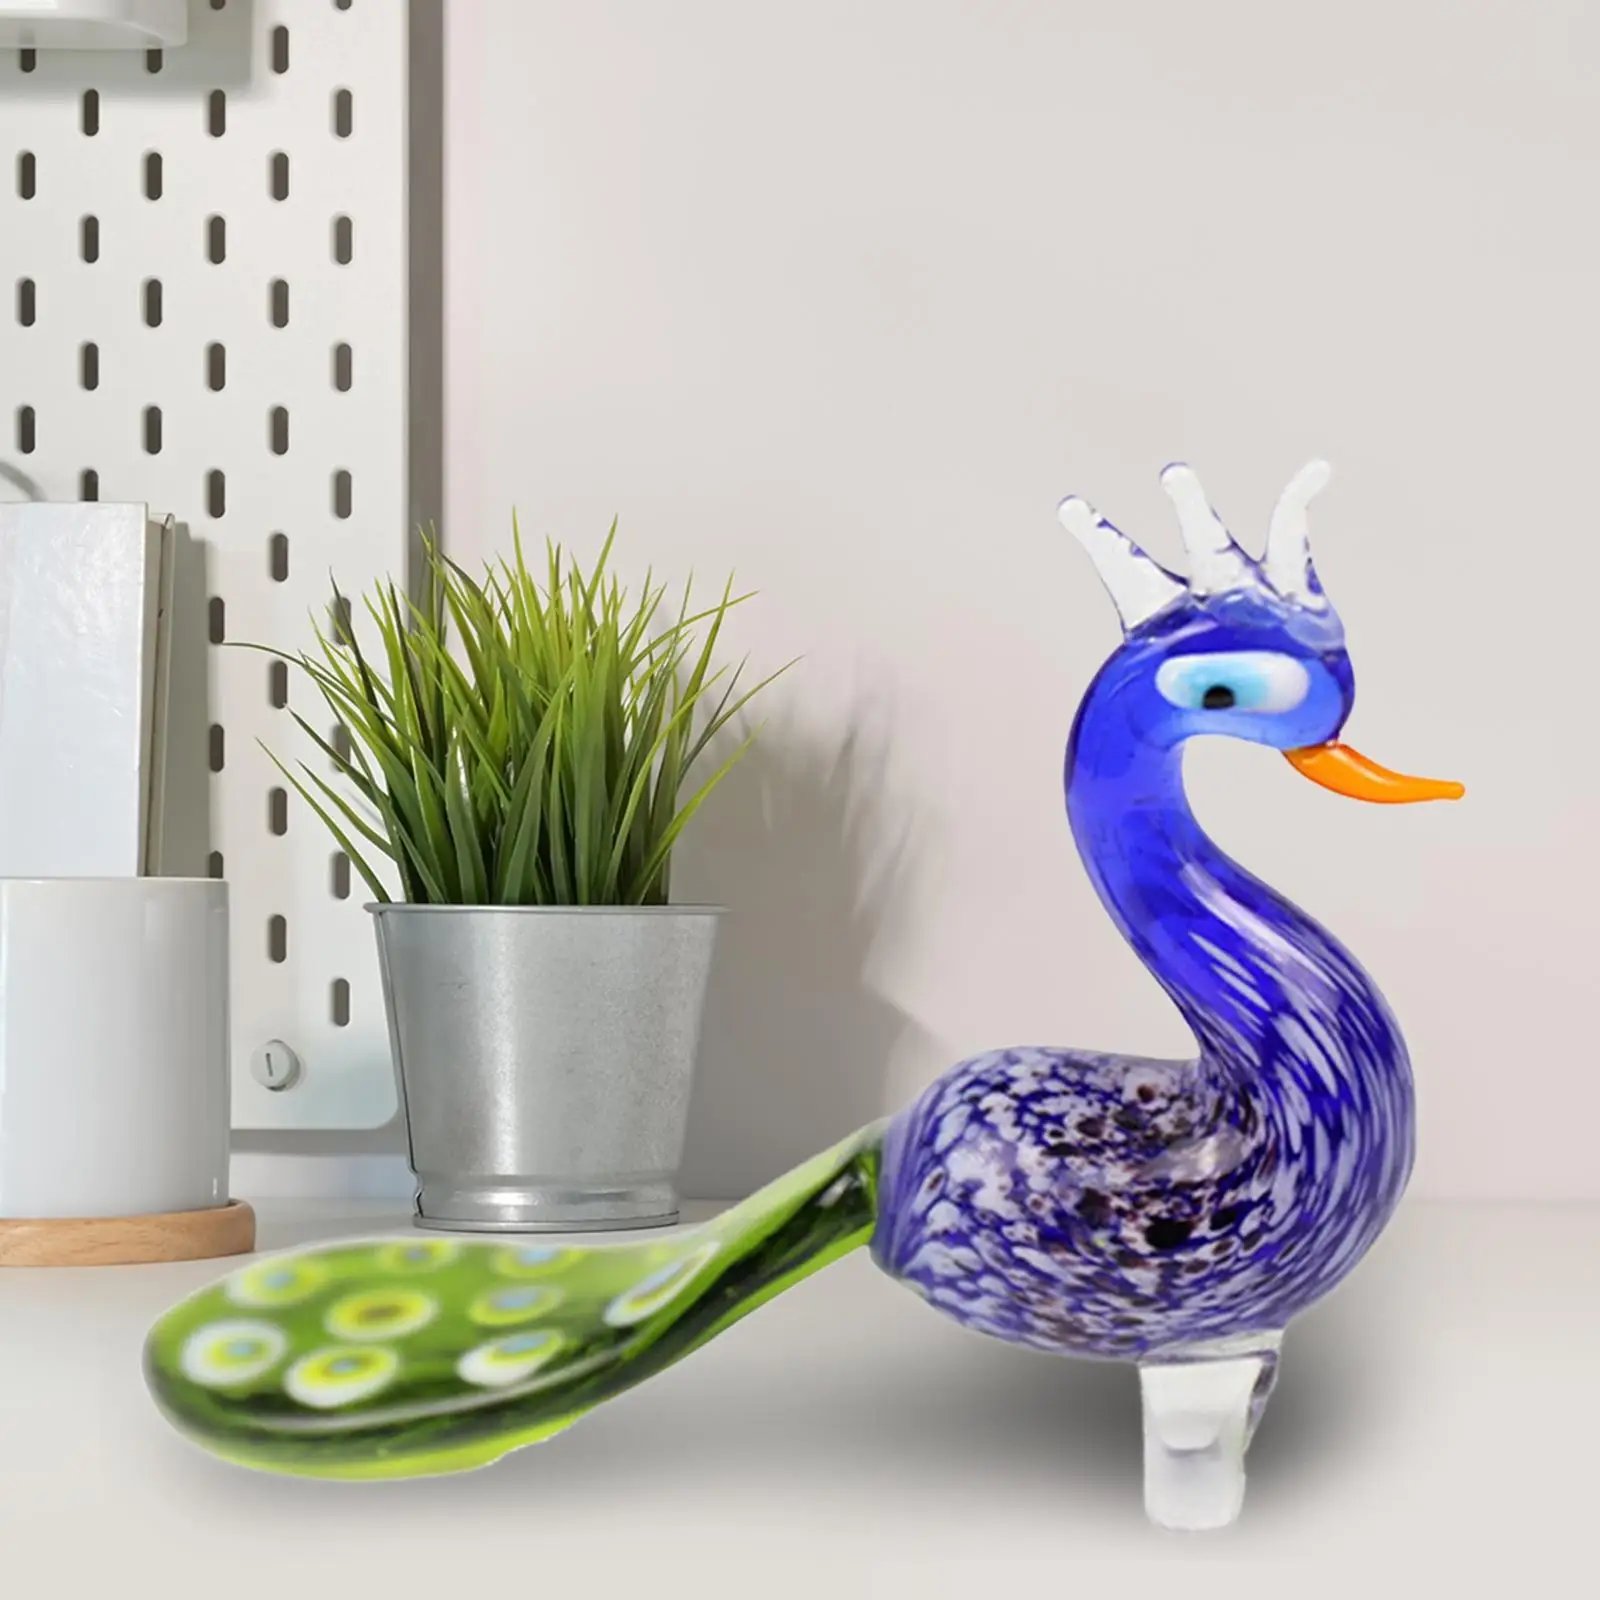 Glass Blown Peacocks Housewarming Gift Sun Resistant Delicate Details Cute